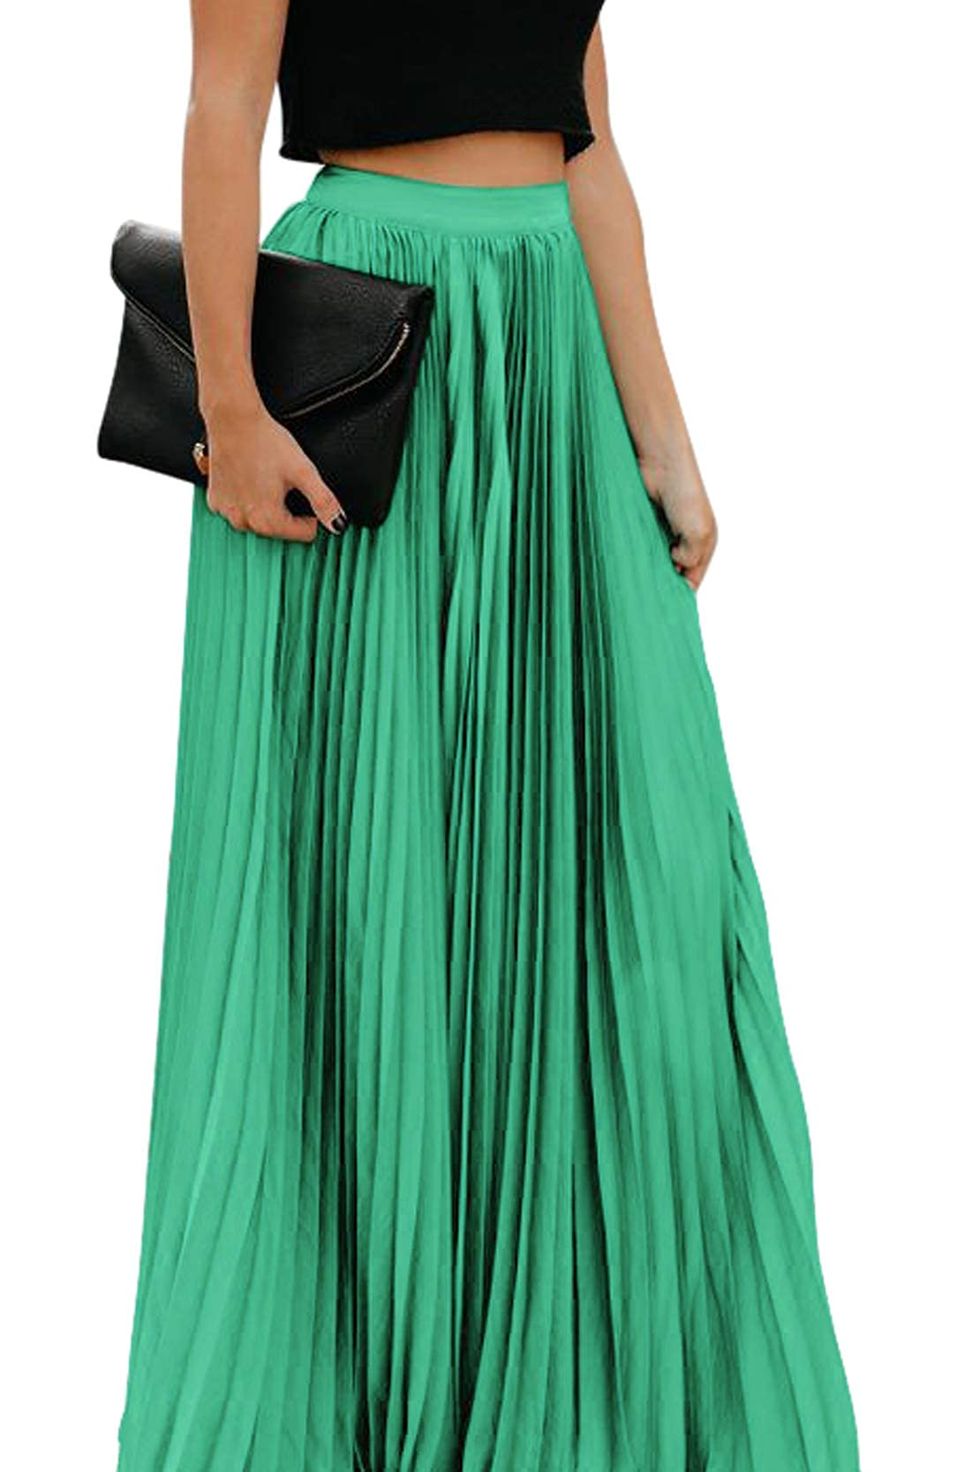 Emerald Green Floral Print Skirt - Satin Skirt - Maxi Skirt - Lulus